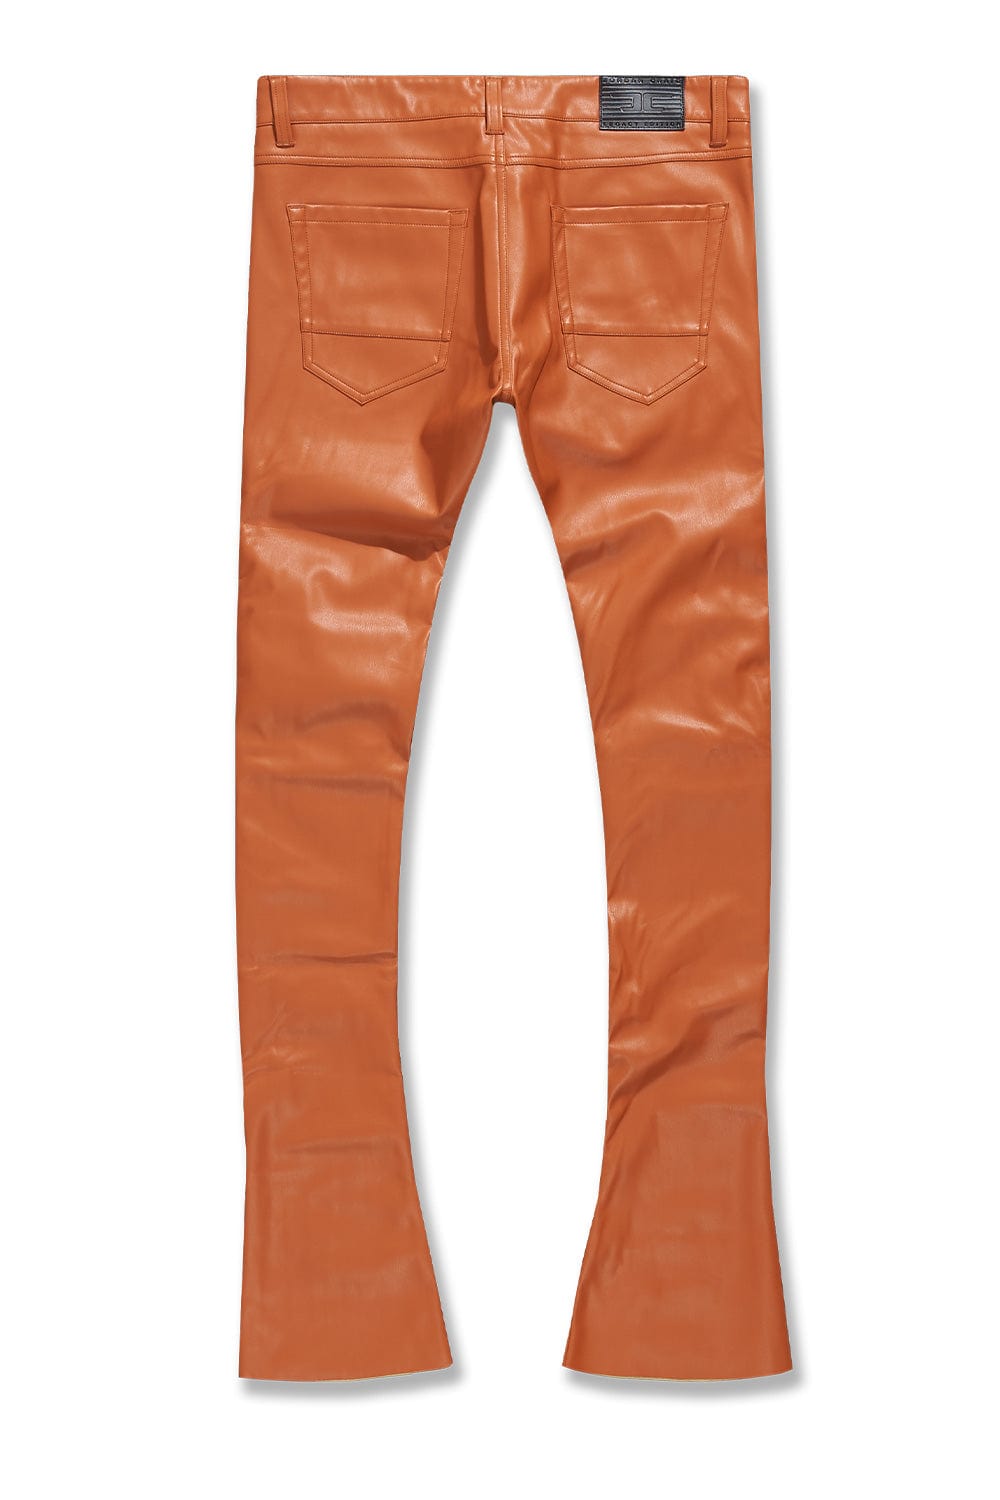 Men's Orange Pants Outfits-35 Best Ways to Wear Orange Pants | Orange pants  outfit, Mens outfits, Orange pants